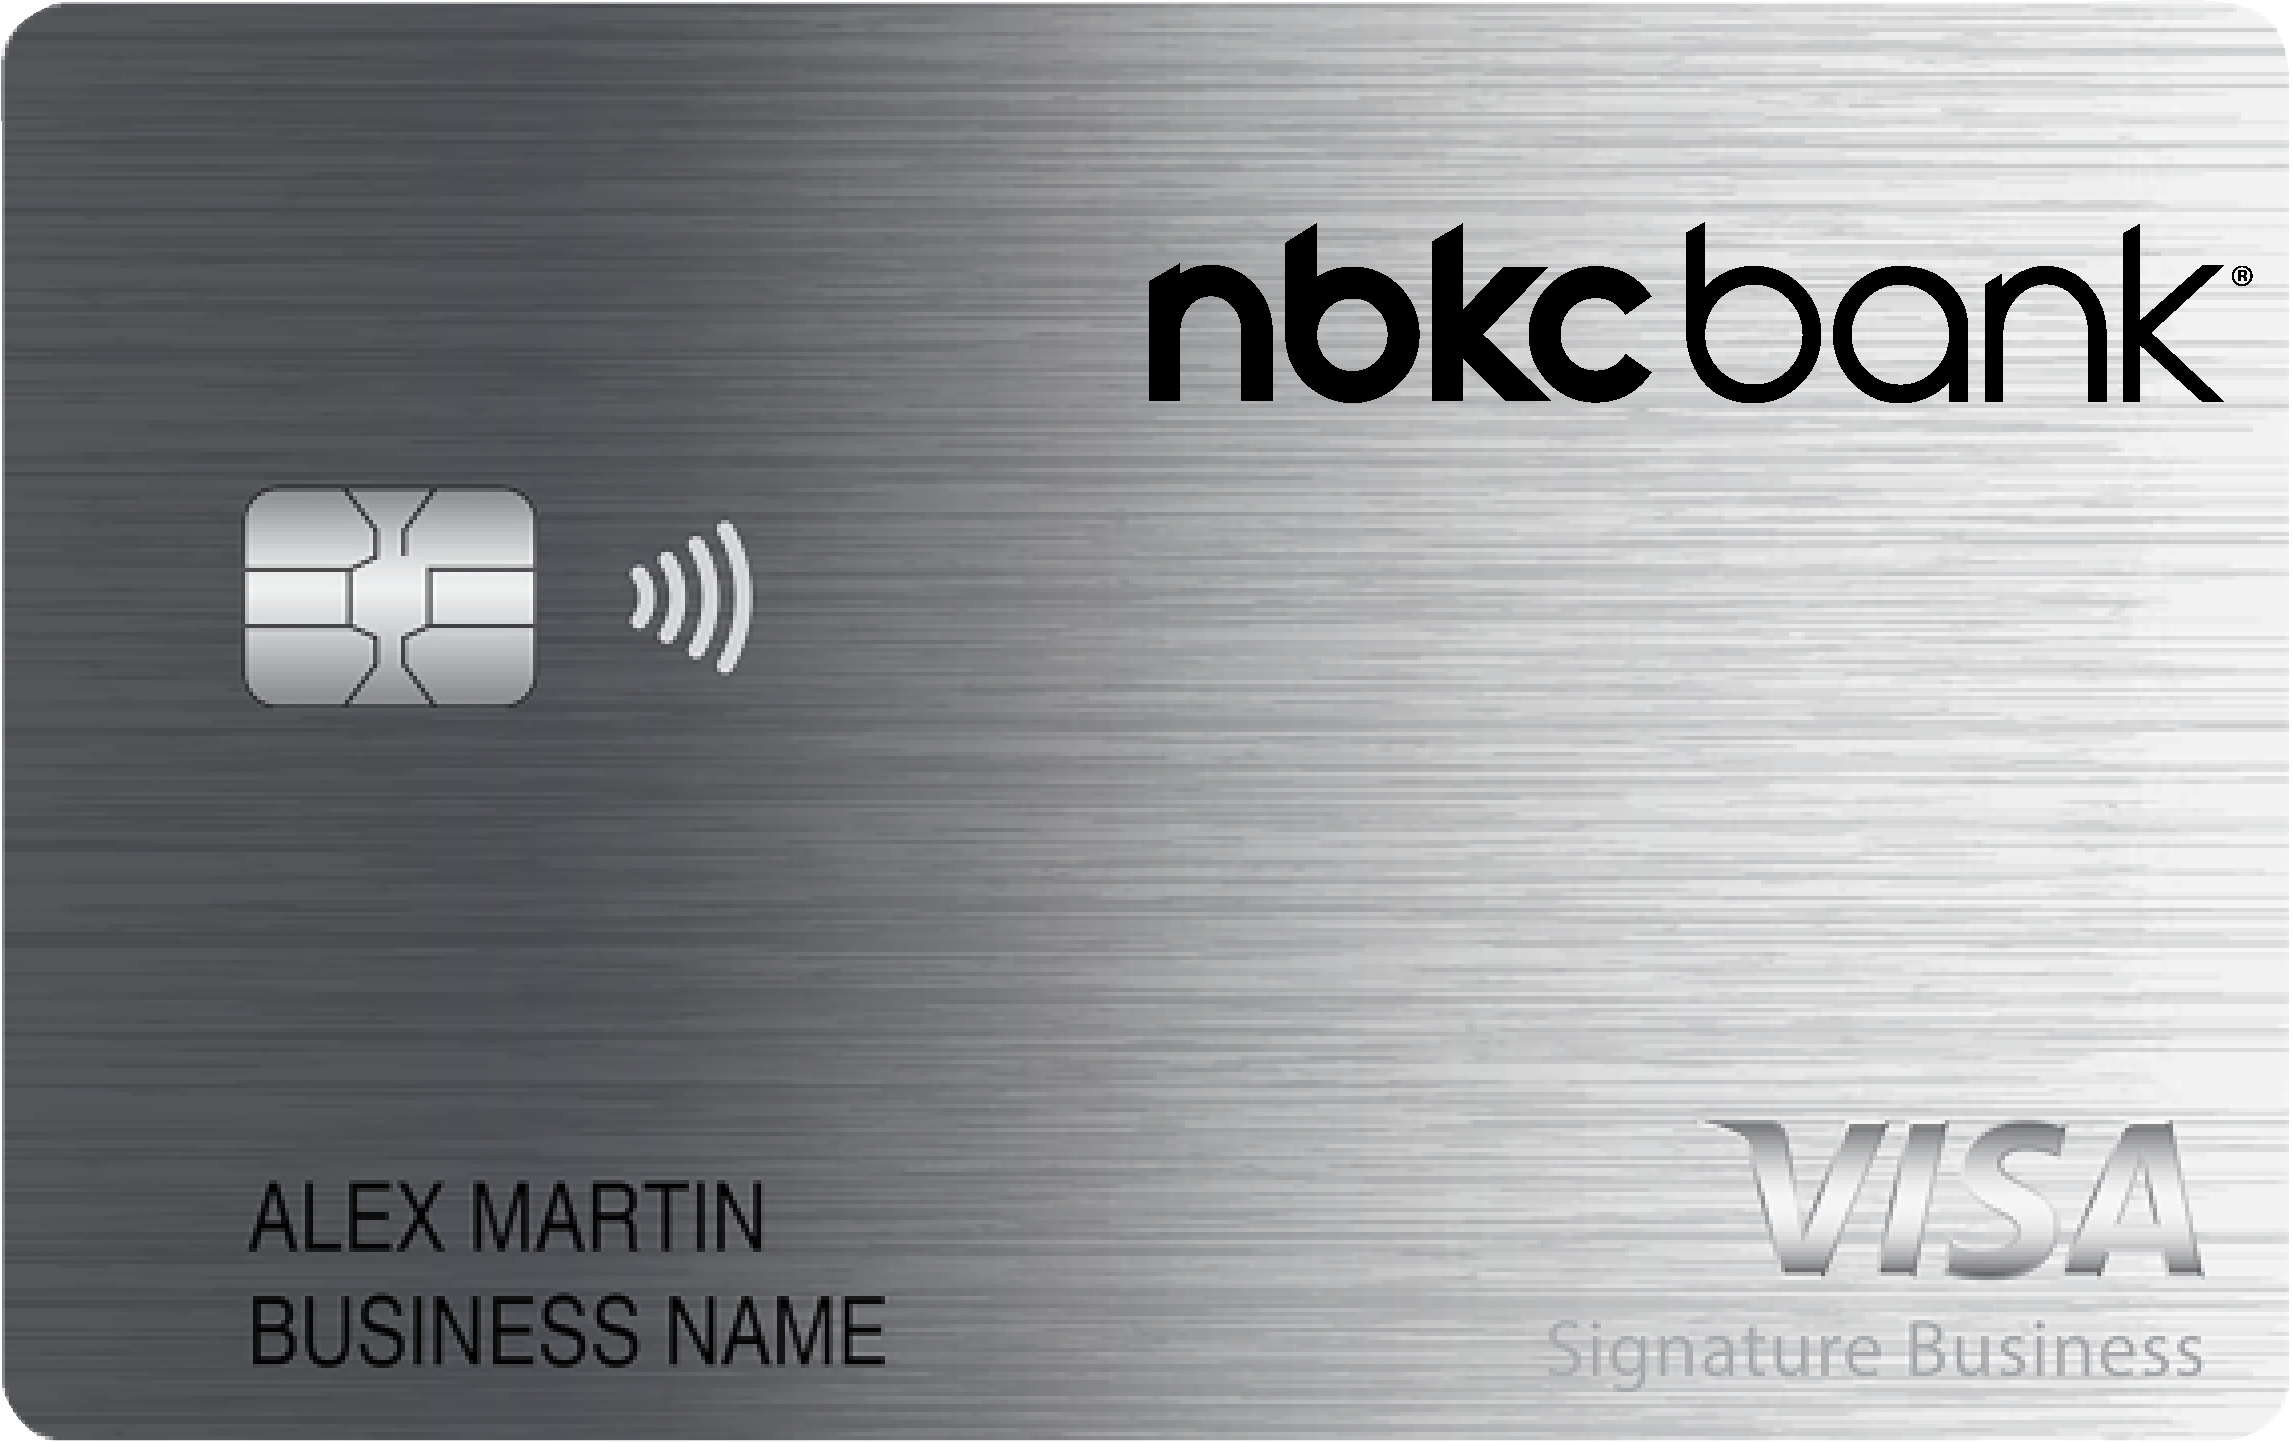 NBKC Bank Smart Business Rewards Card